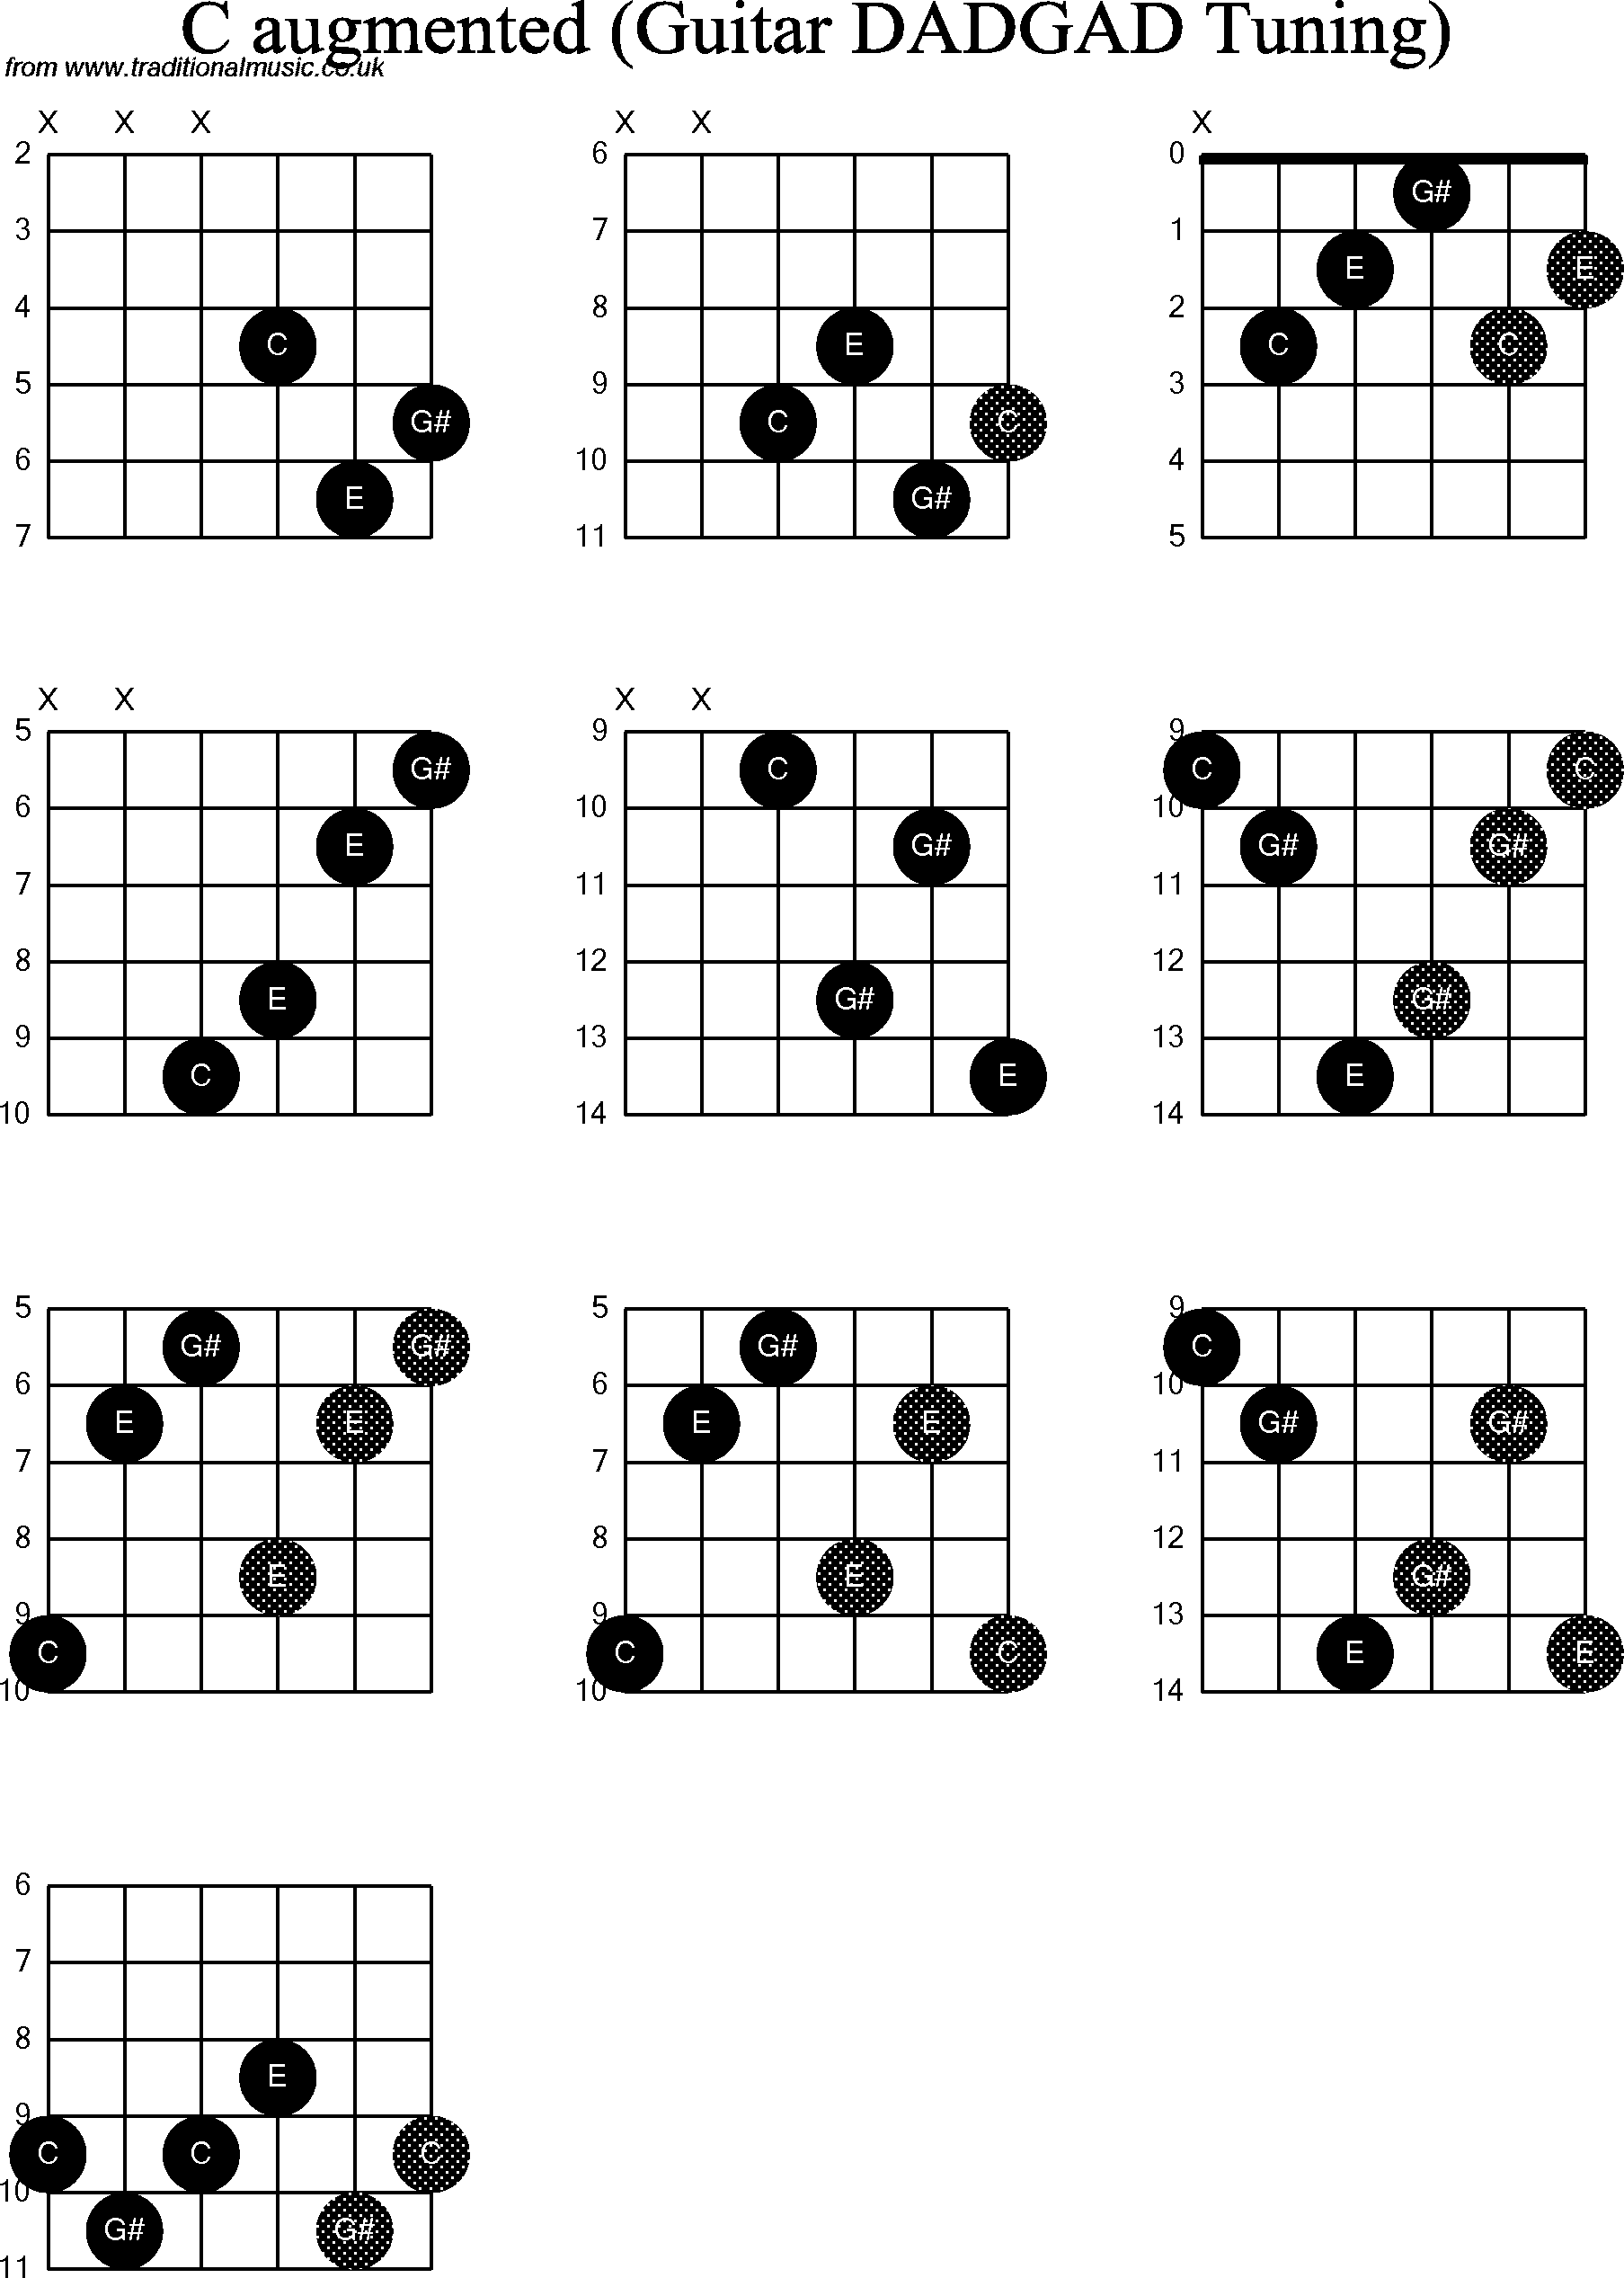 Chord Diagrams for D Modal Guitar(DADGAD), C Augmented